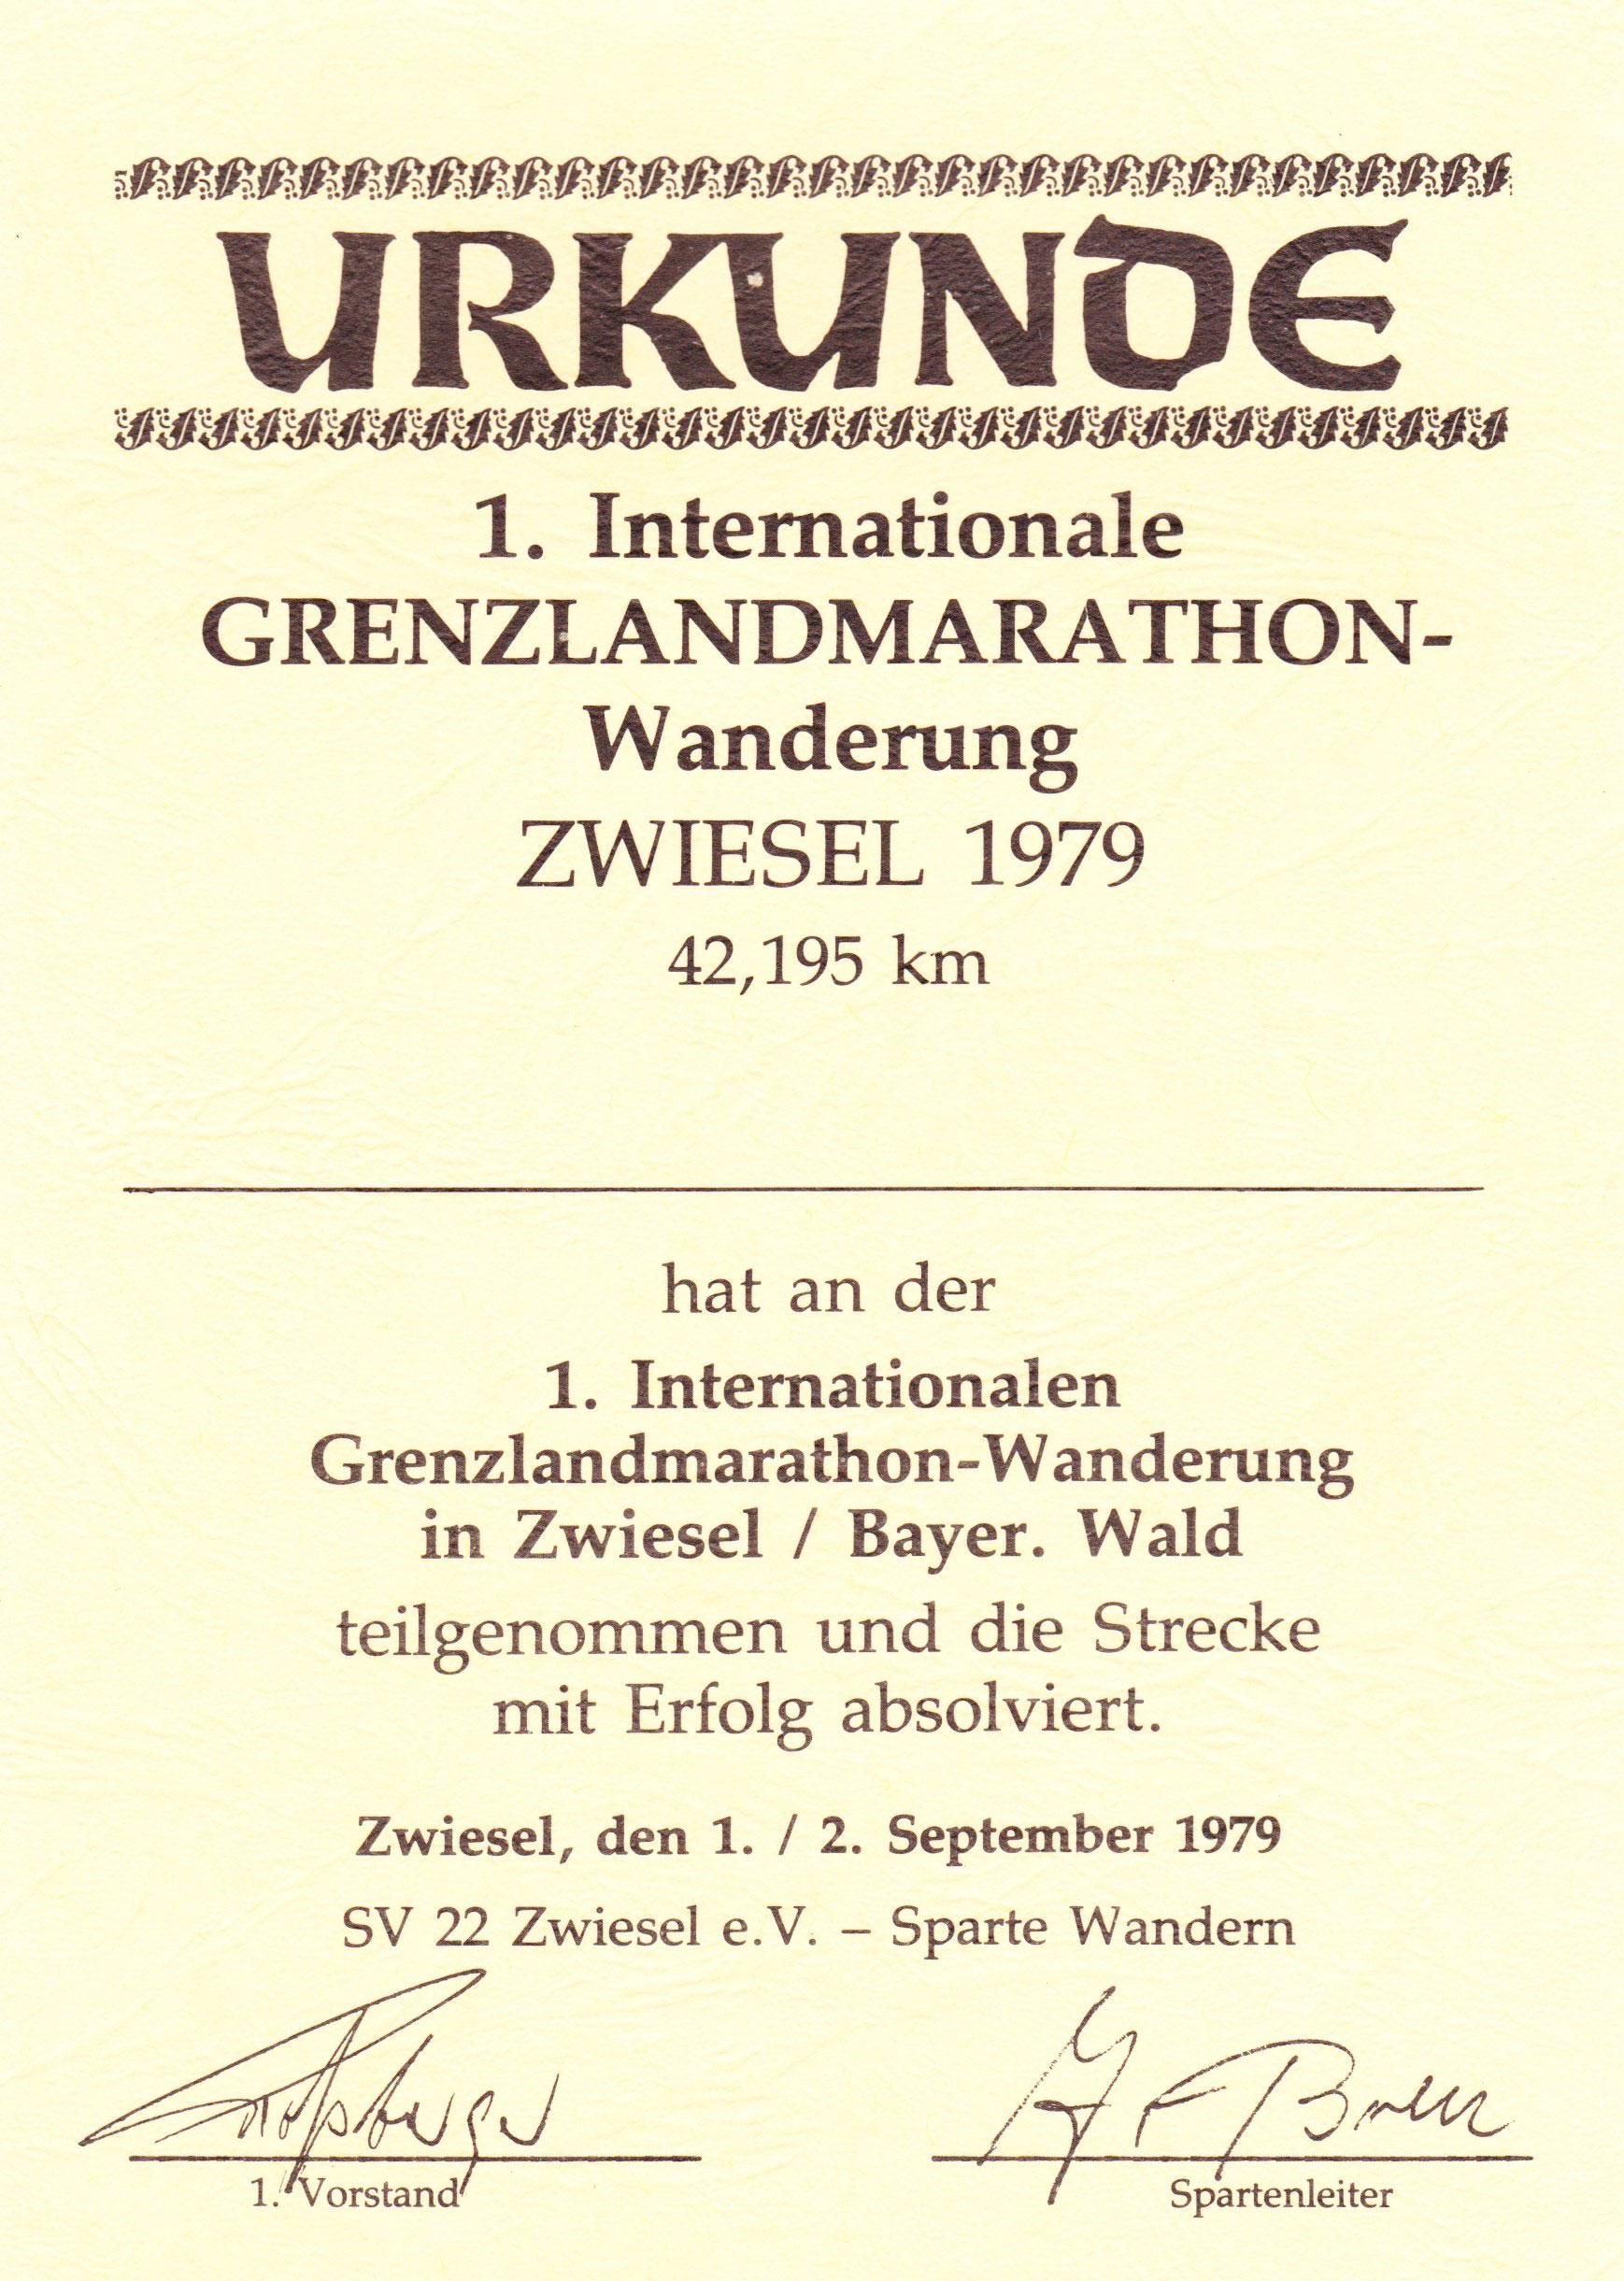 Urkunde-Zwiesel-1979